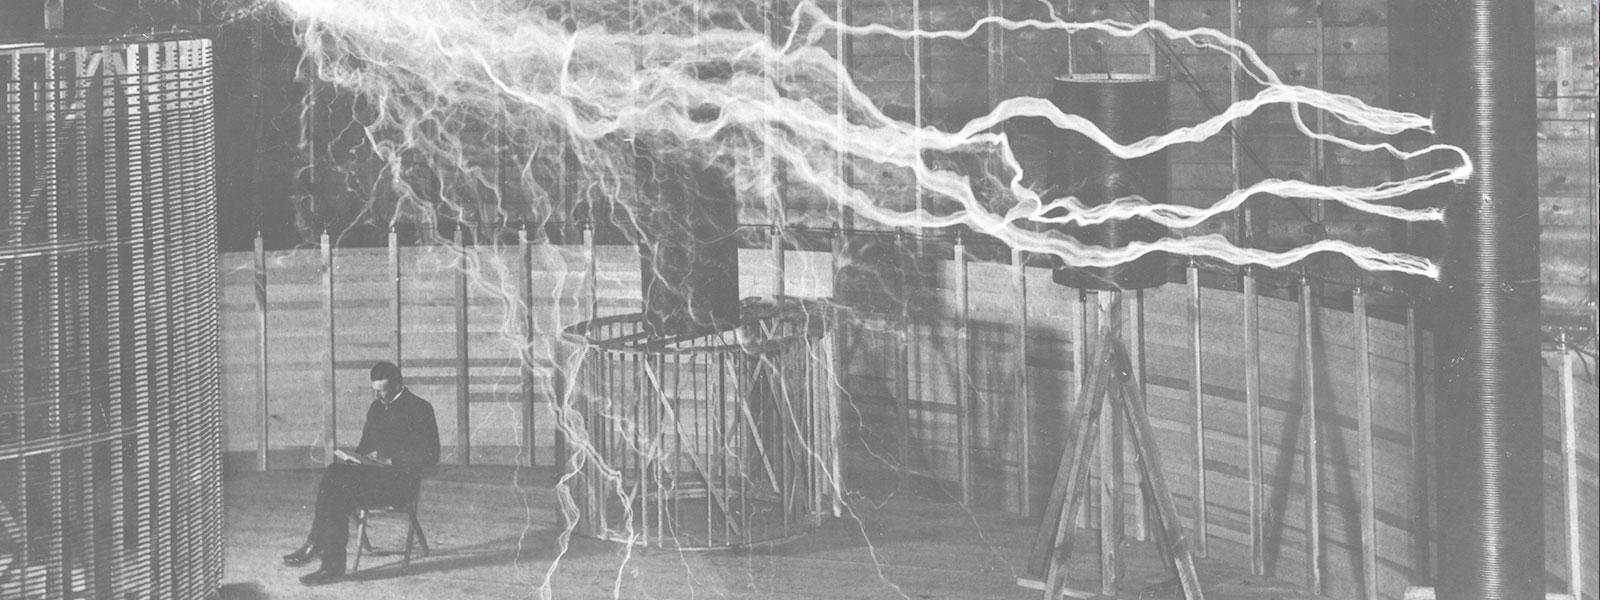 Nikola Tesla and his Colorado Springs oscillator